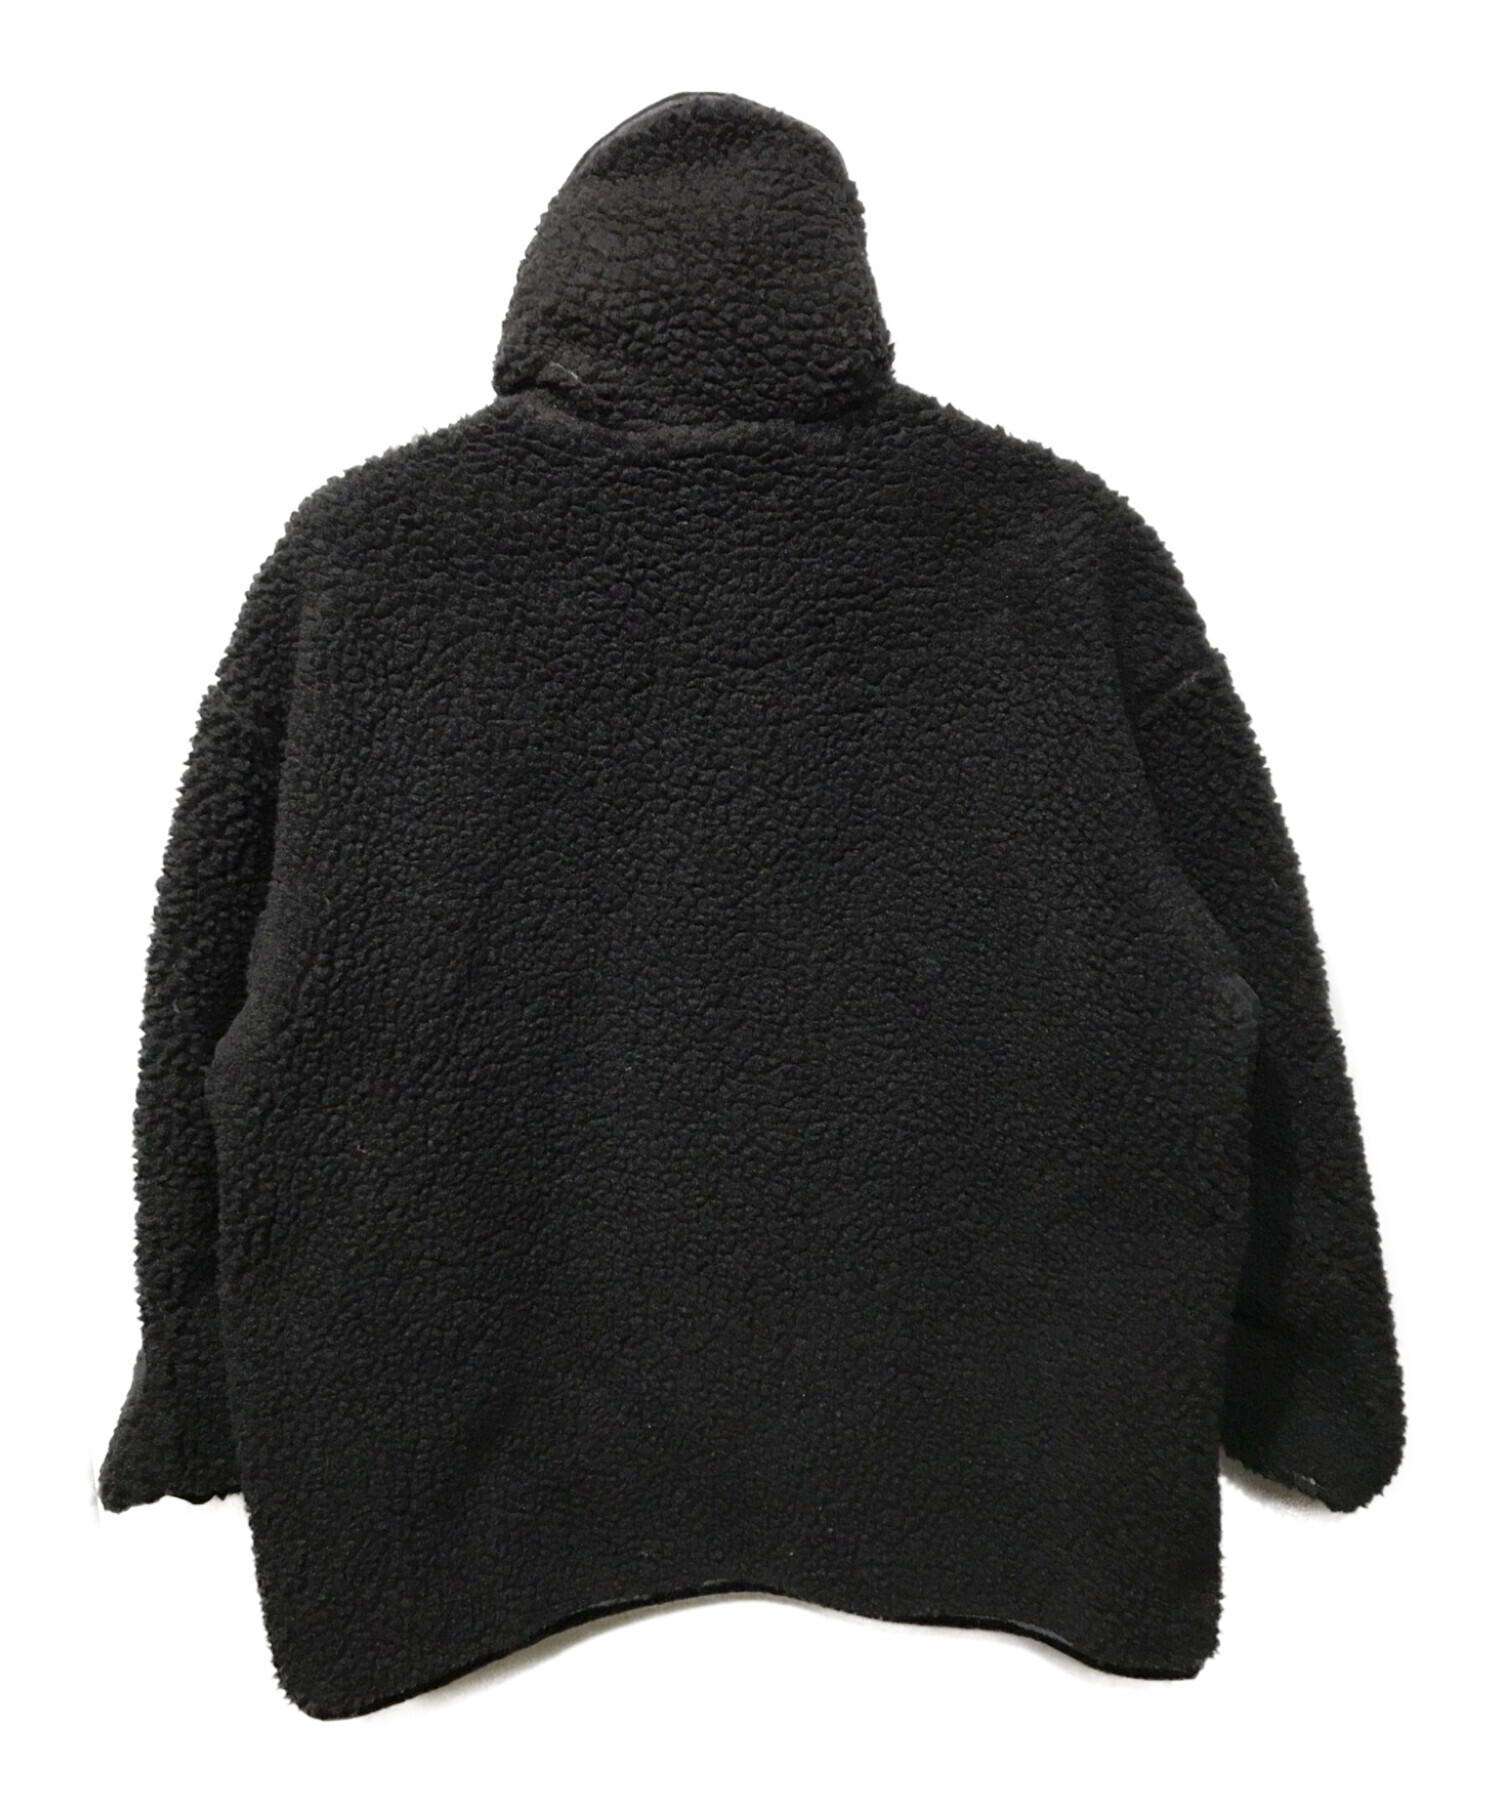 is-ness (イズネス) Reversible Fleece Jacket ブラック サイズ:M